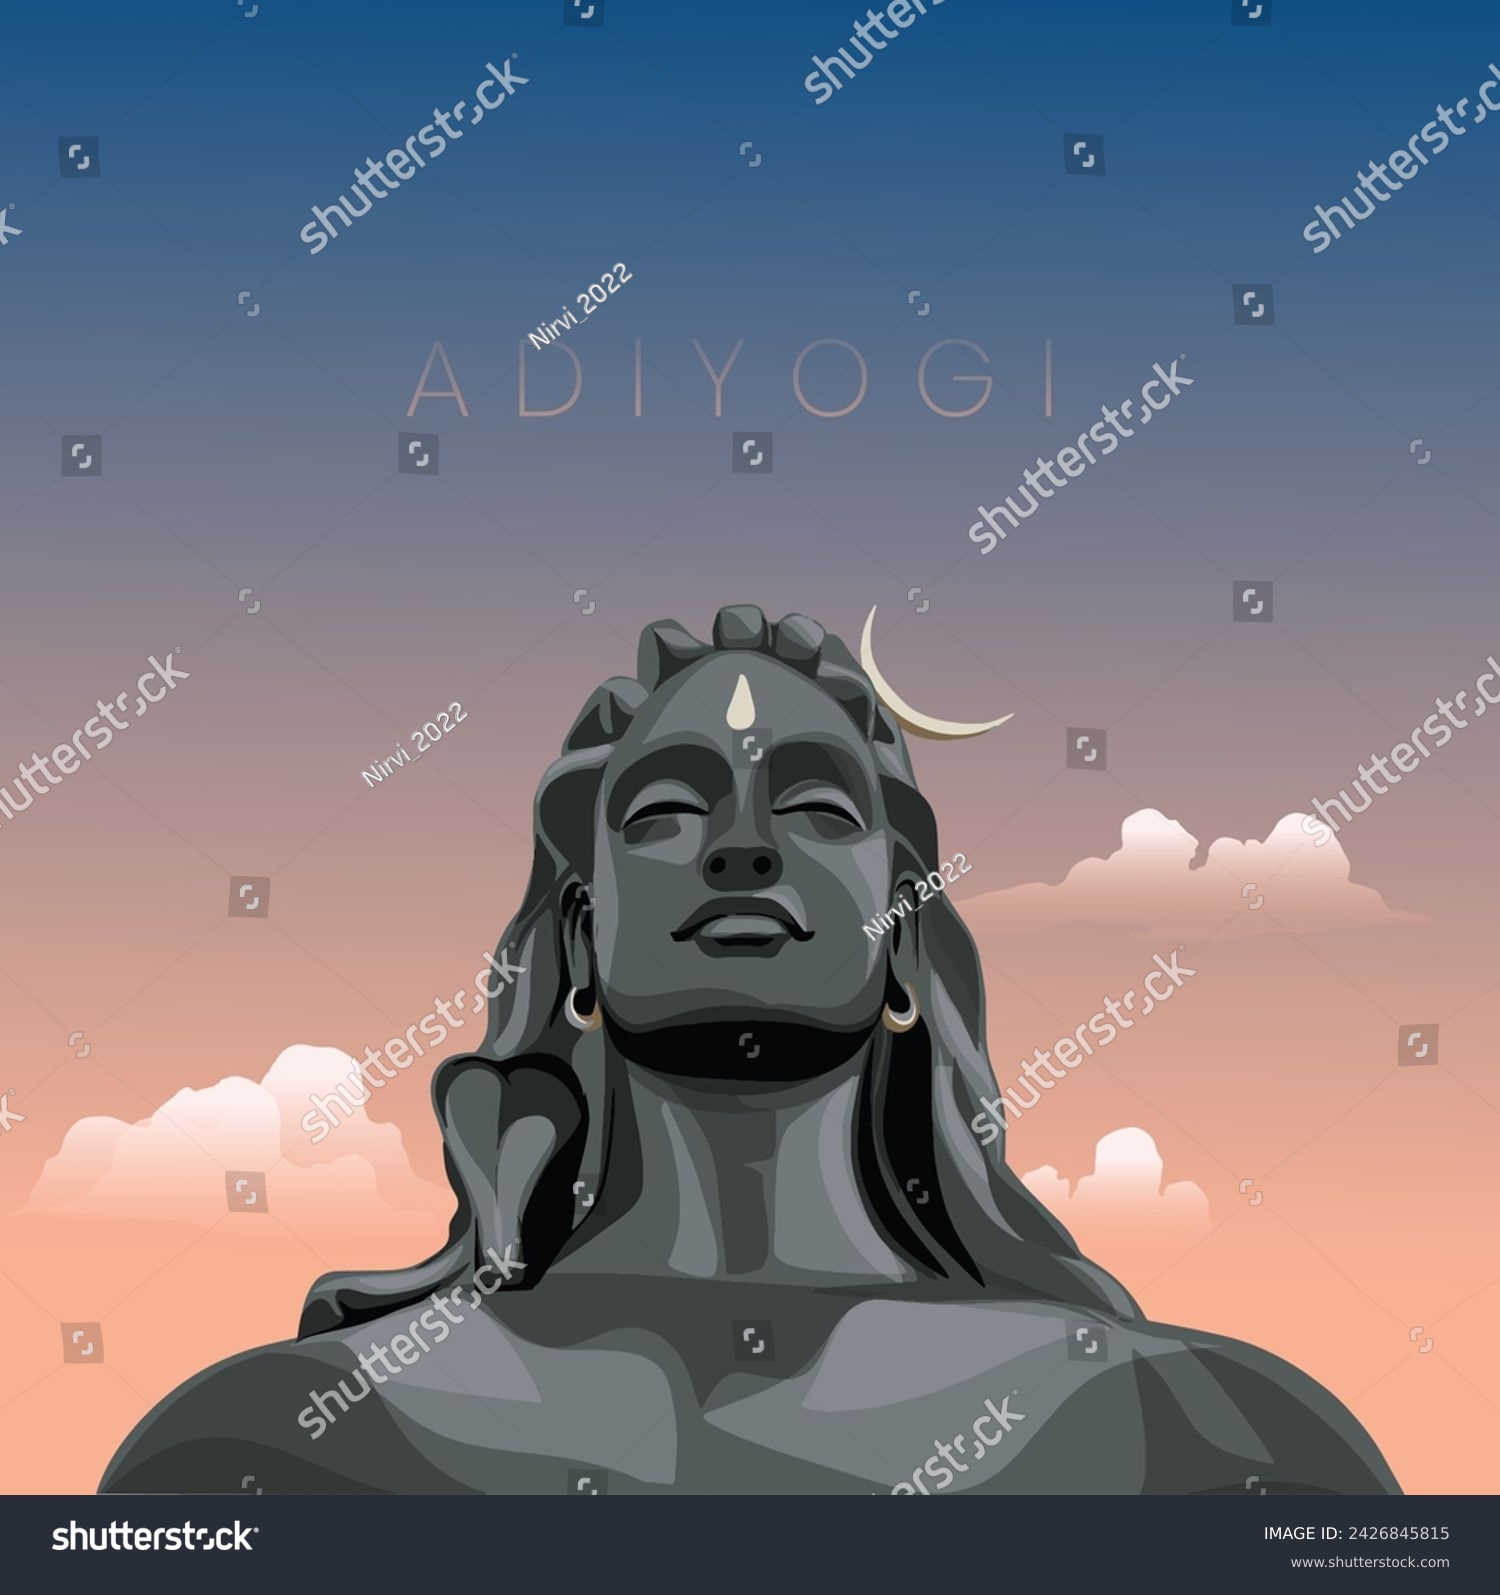 SVG of Adiyogi,The Source of yoga,Statue of lord shiva..Vector illustration of adiyogi svg